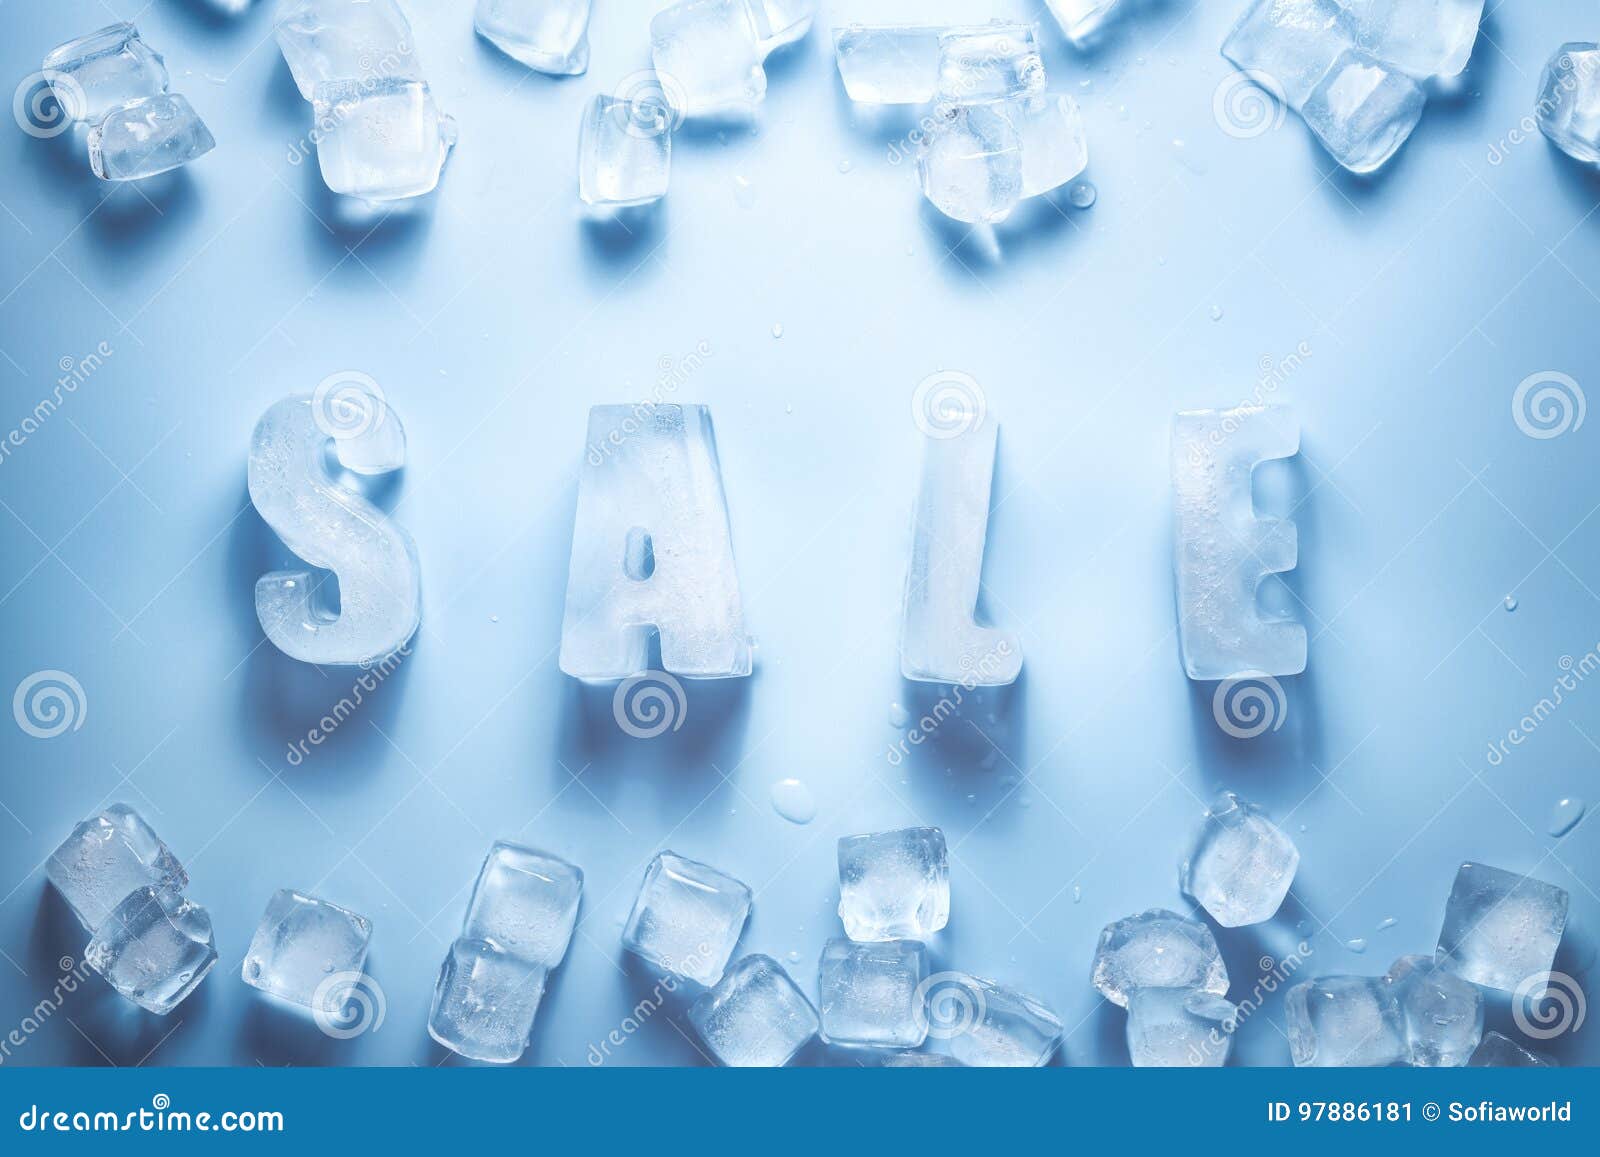 hoffelijkheid Krankzinnigheid Automatisch Ice Letters SALE and Ice Cubes Stock Image - Image of selling, shopping:  97886181